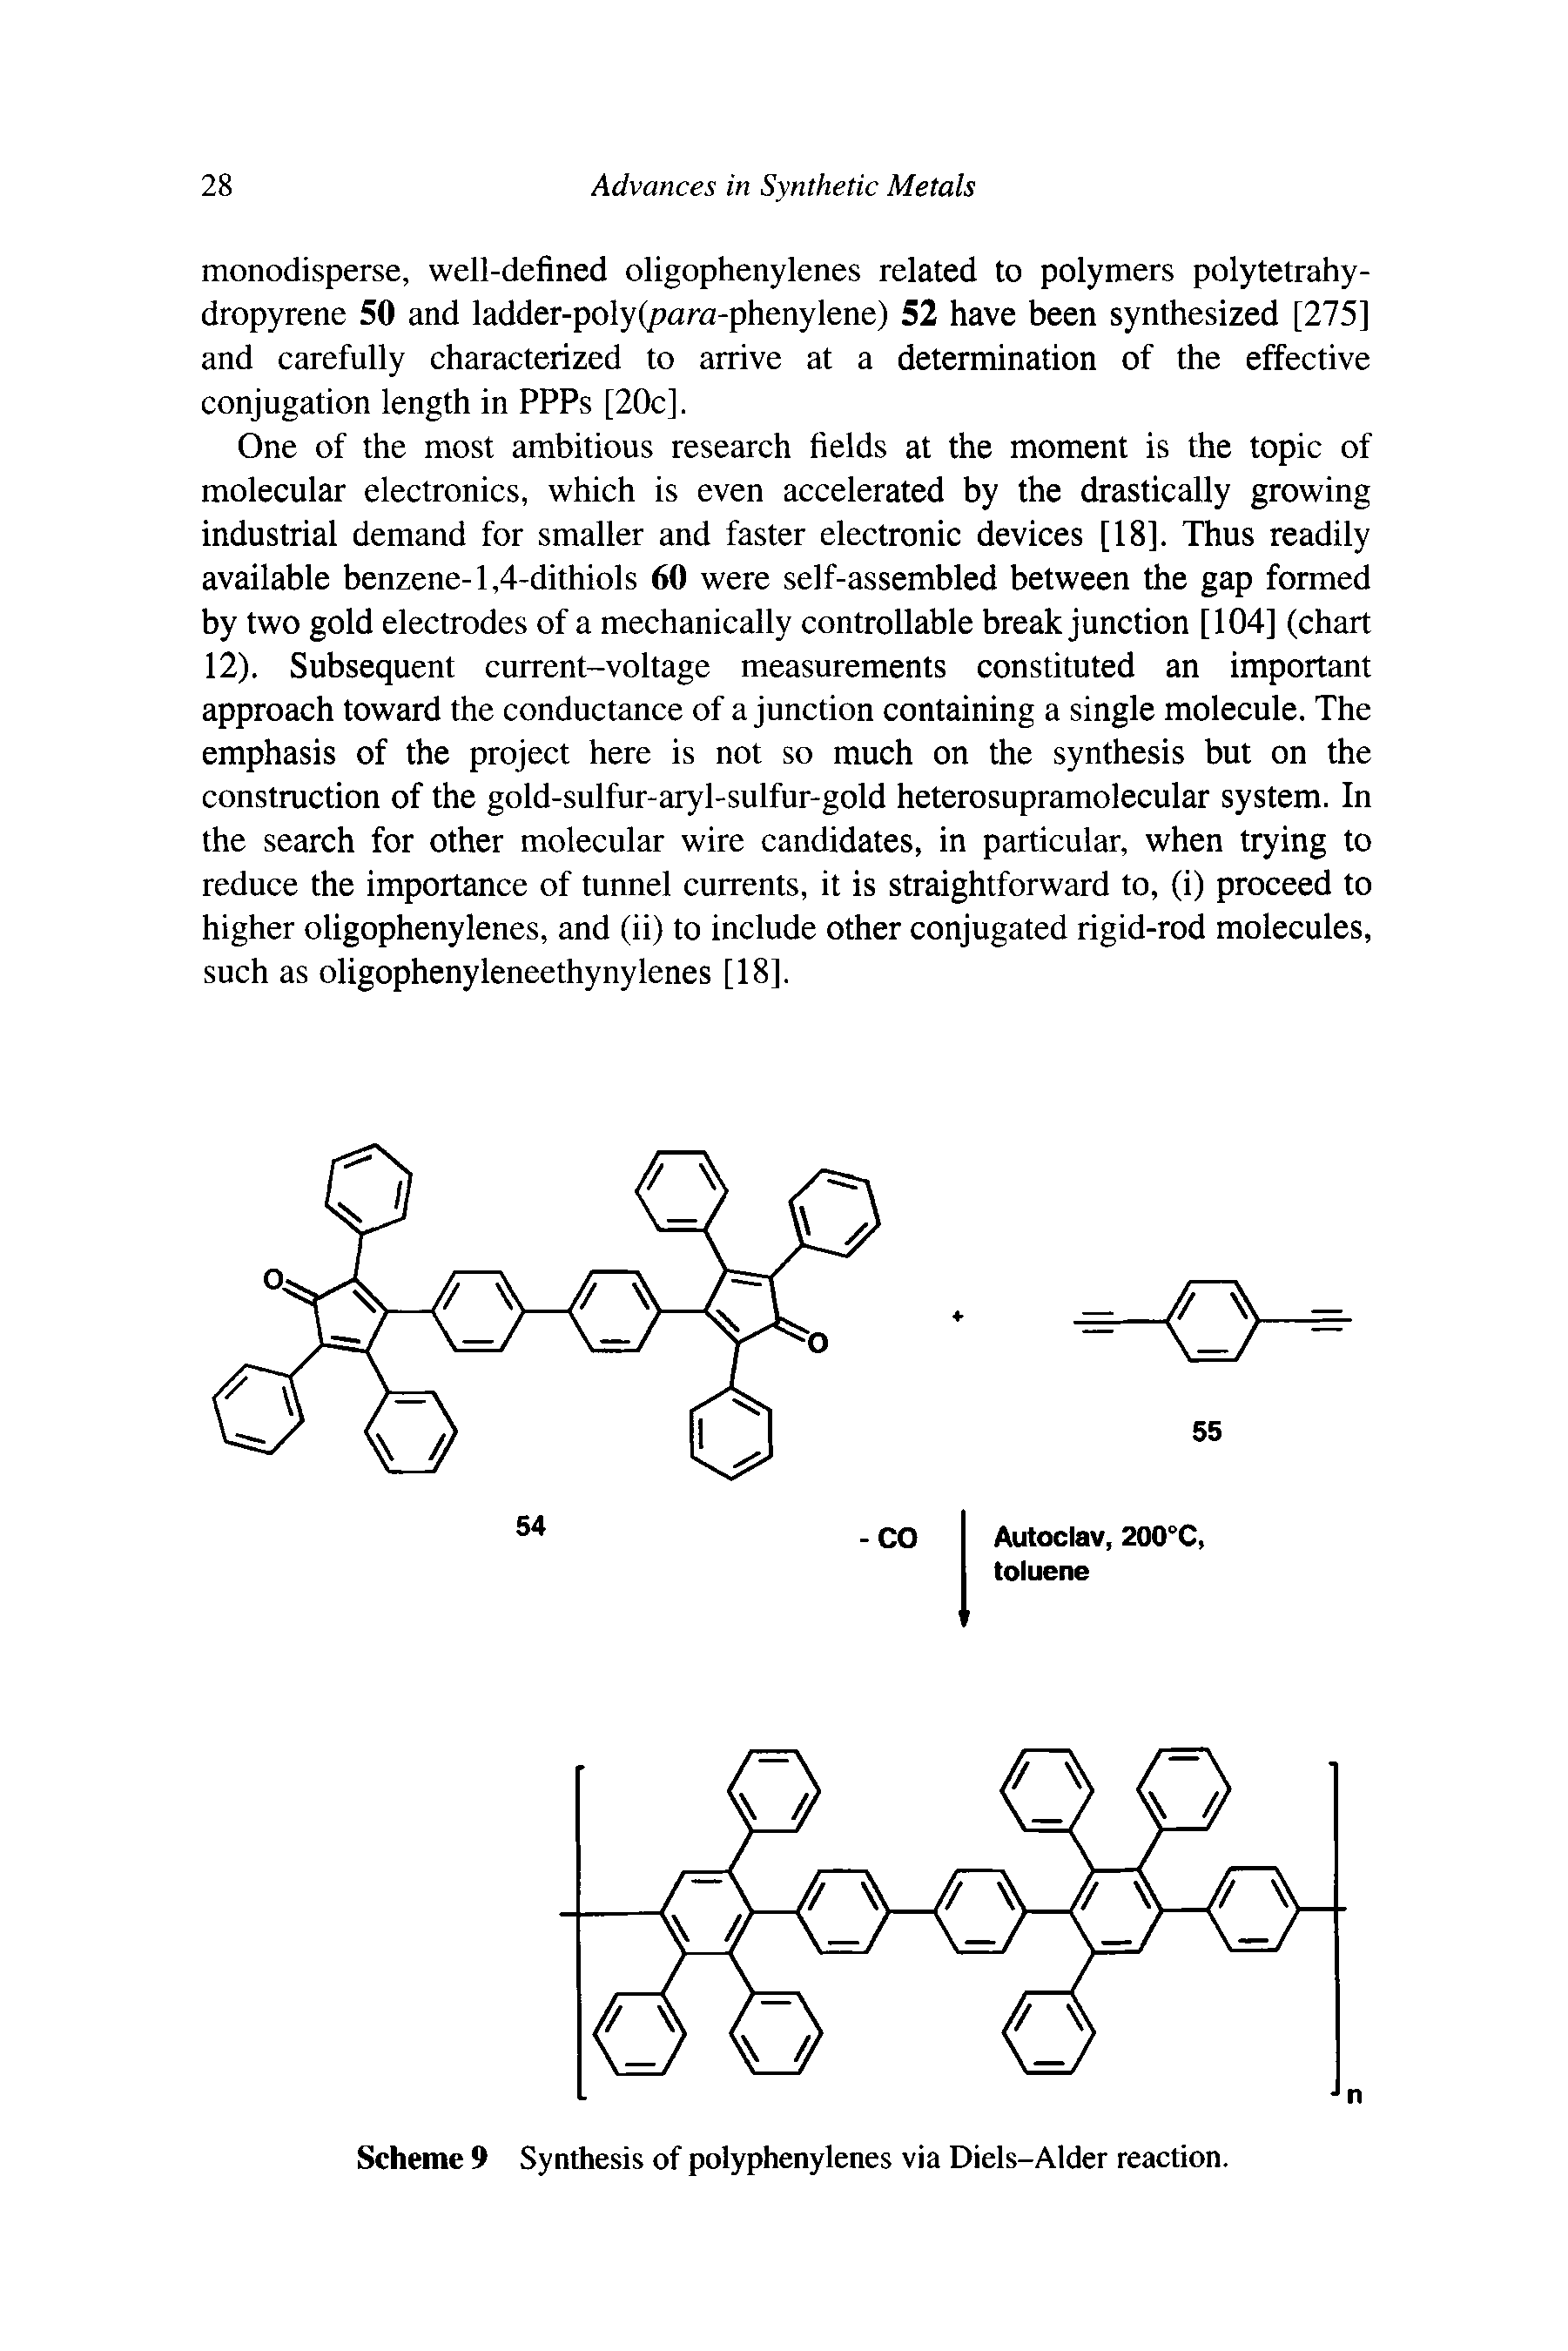 Scheme 9 Synthesis of polyphenylenes via Diels-Alder reaction.